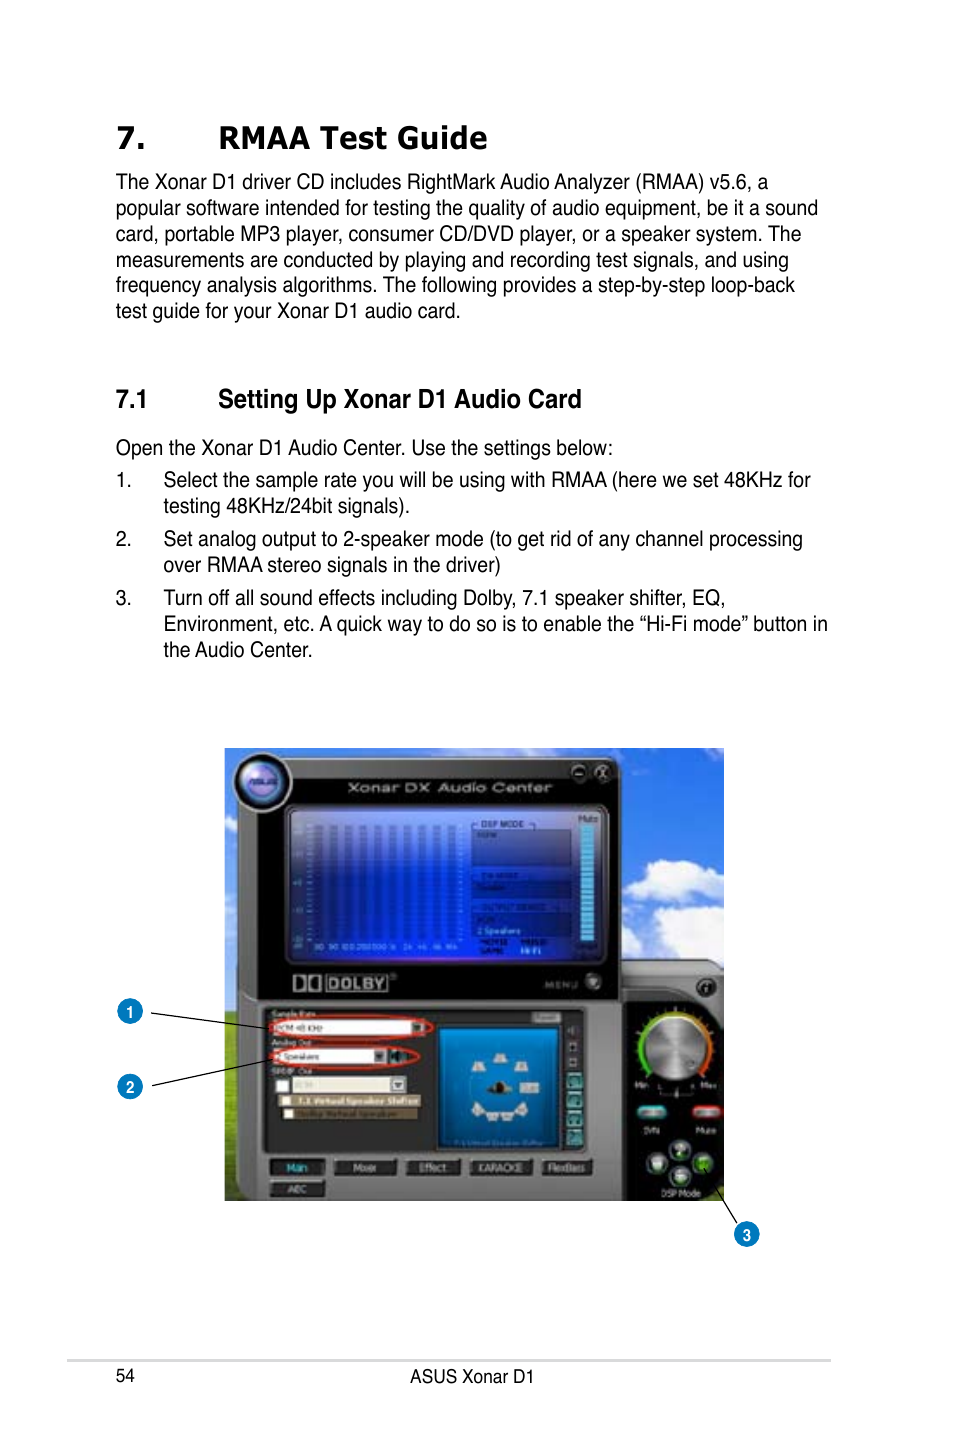 Rmaa test guide, 1 setting up xonar d1 audio card, Rmaa test guide 7.1 | Asus  Xonar D1 User Manual | Page 54 / 72